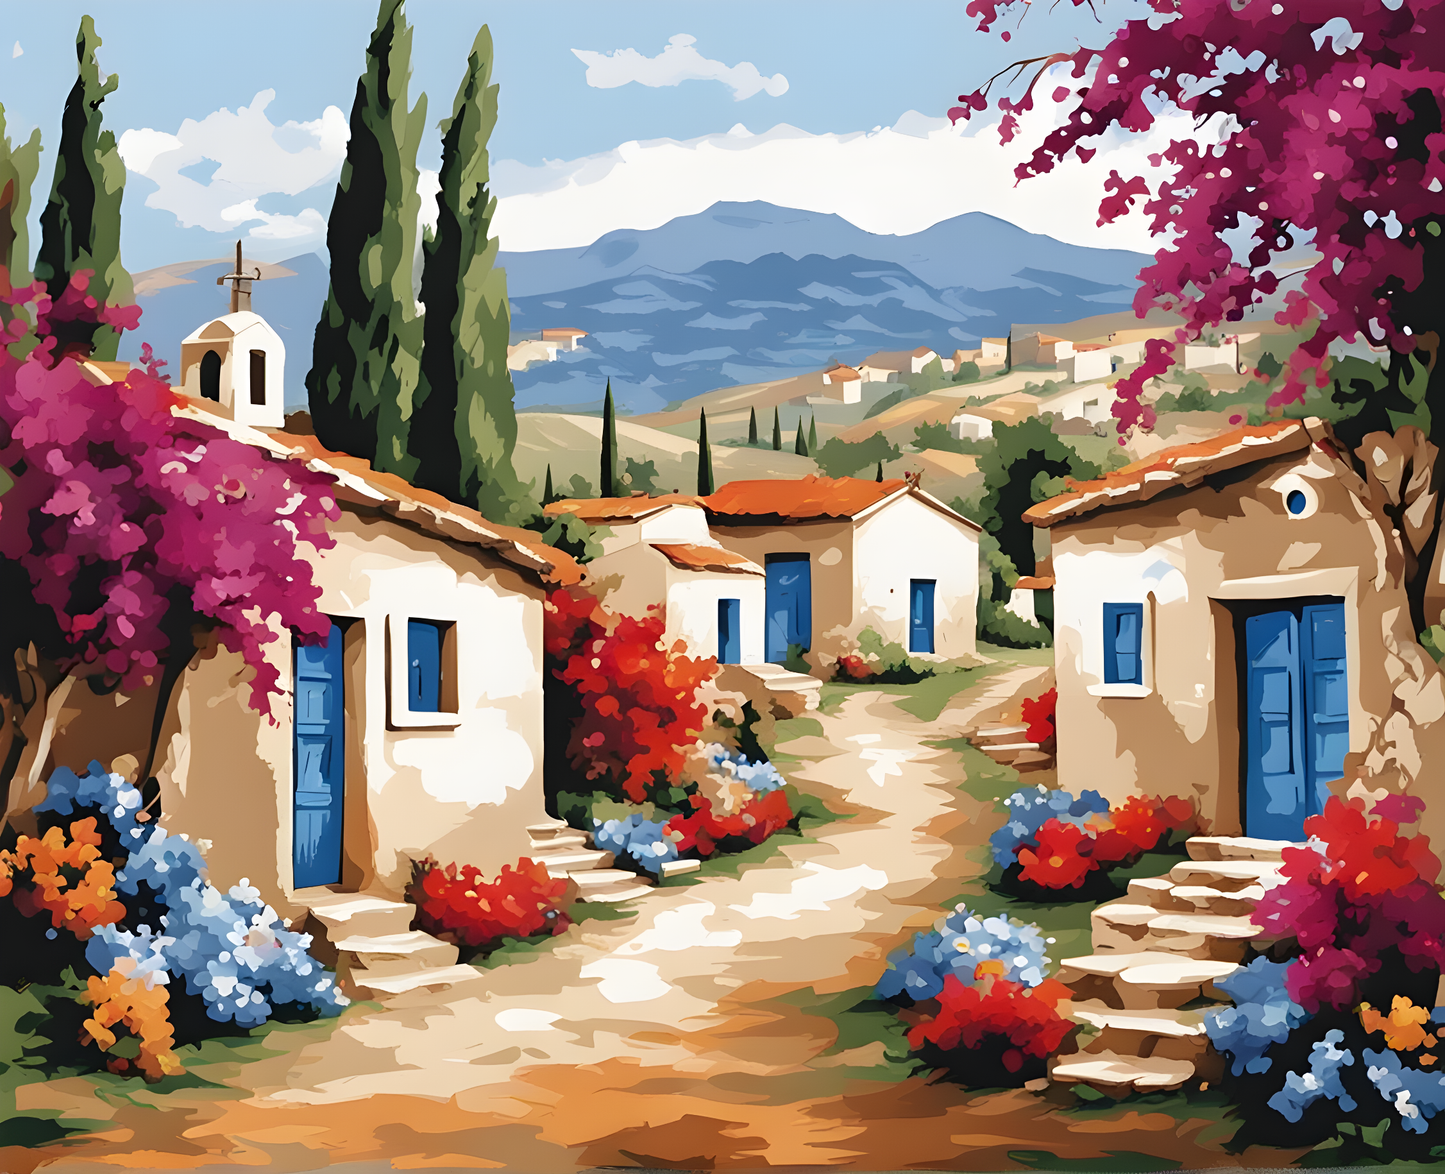 Farsala Village Farm, Greece (PD) - Van-Go Paint-By-Number Kit